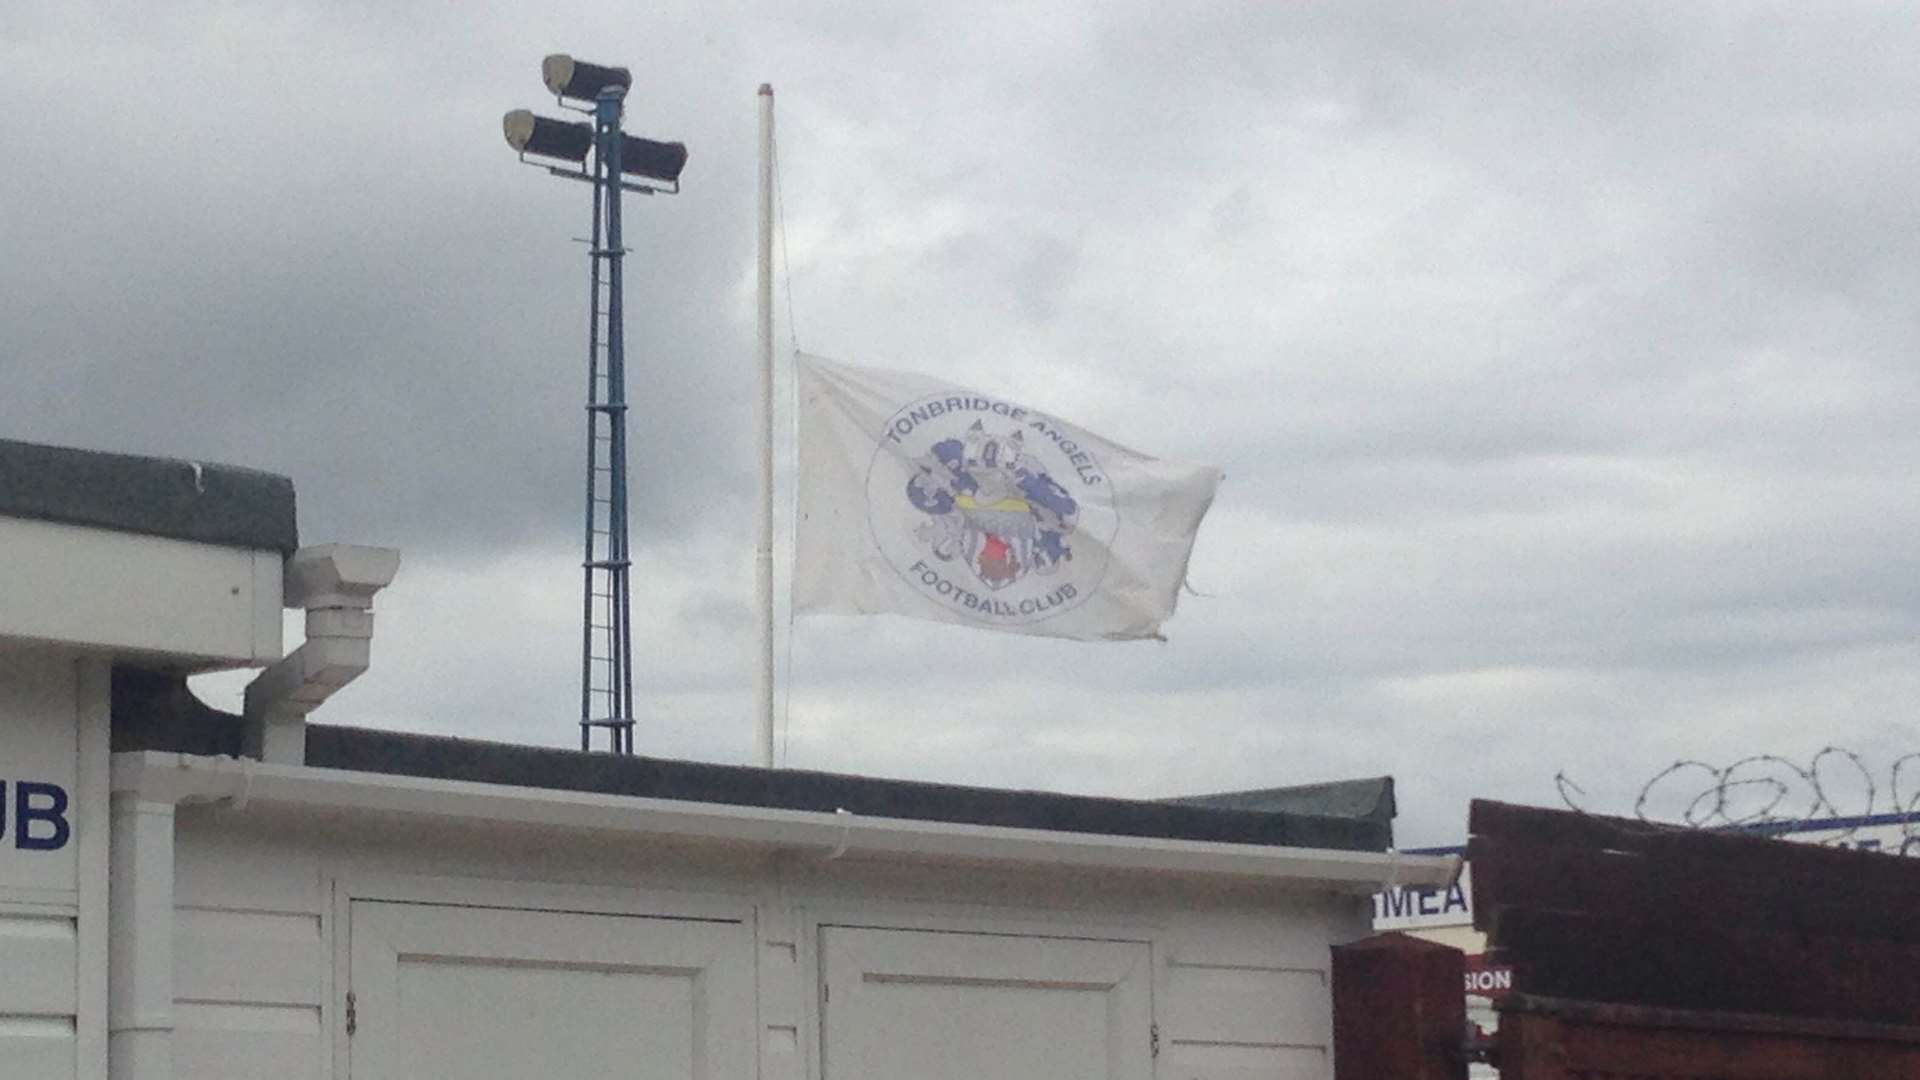 The Tonbridge Angels flag flying at half mast